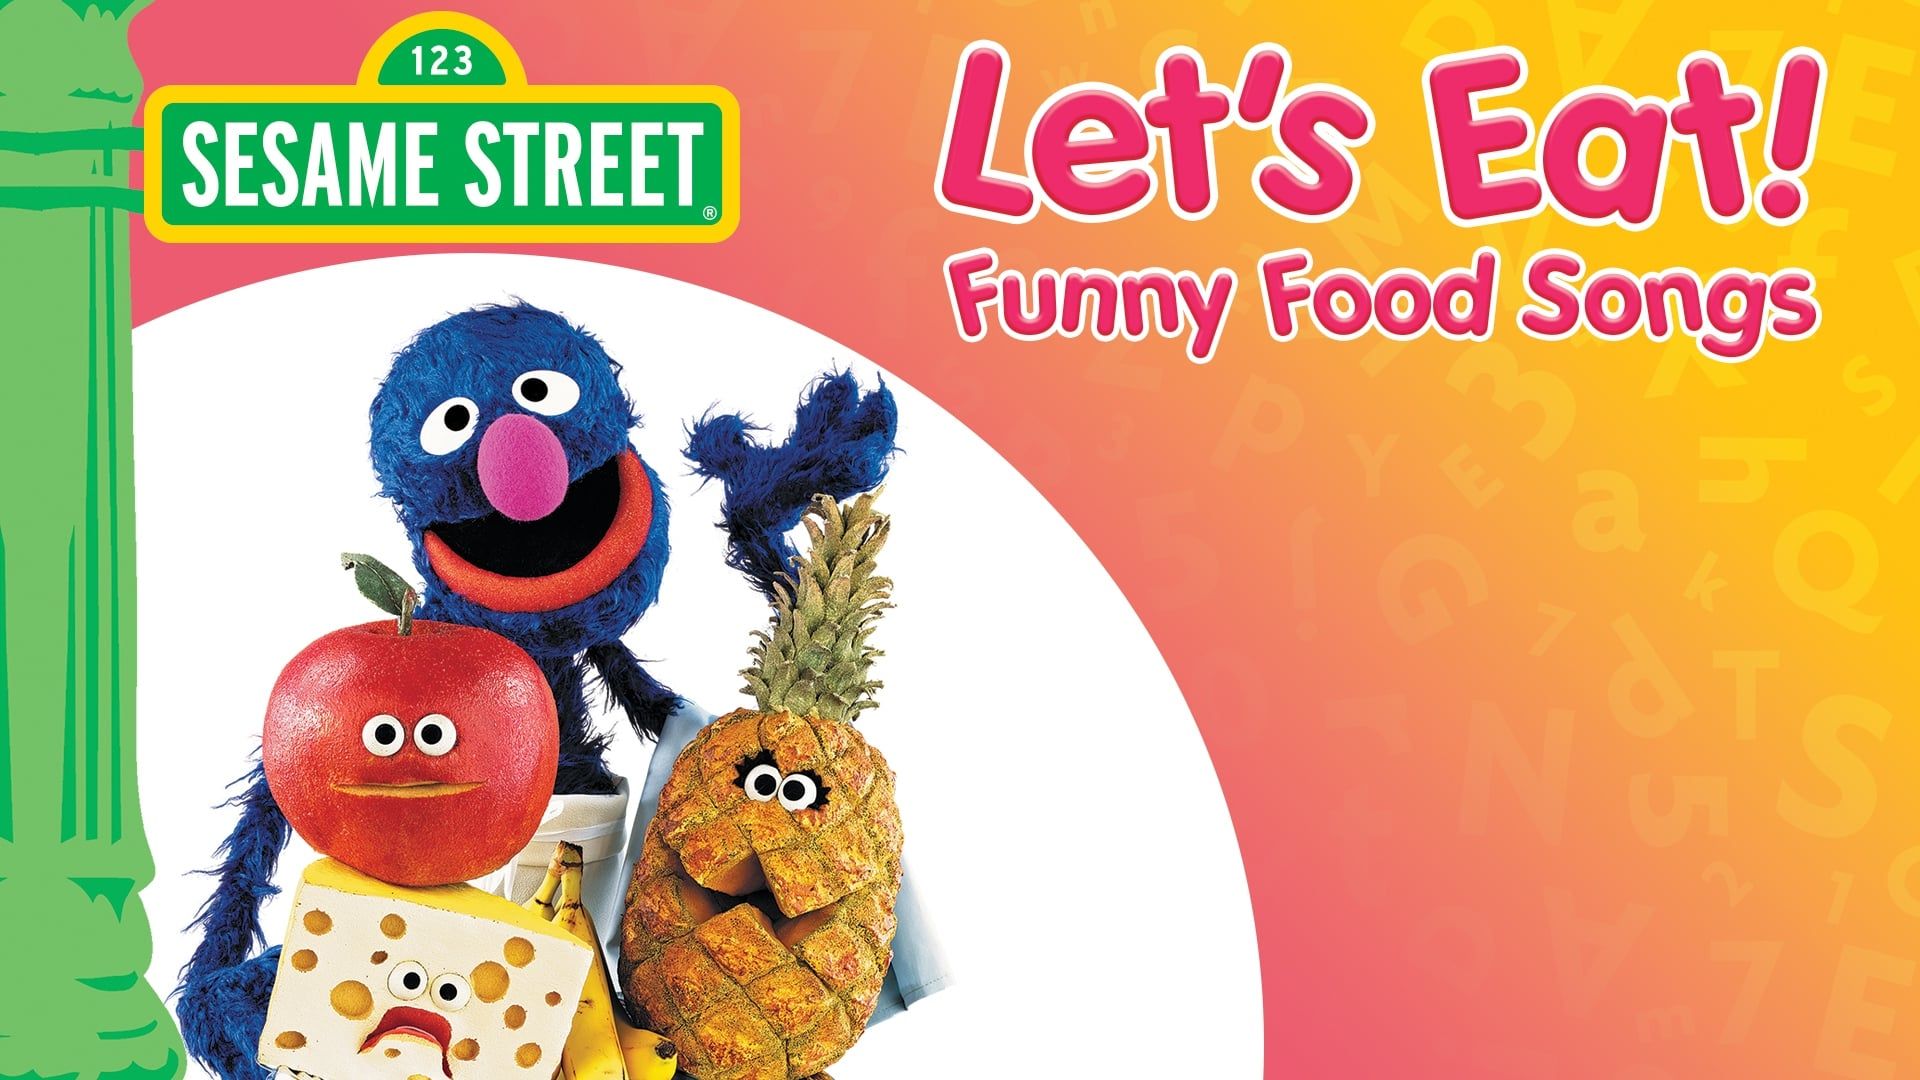 Sesame Street: Let's Eat! Funny Food Songs background